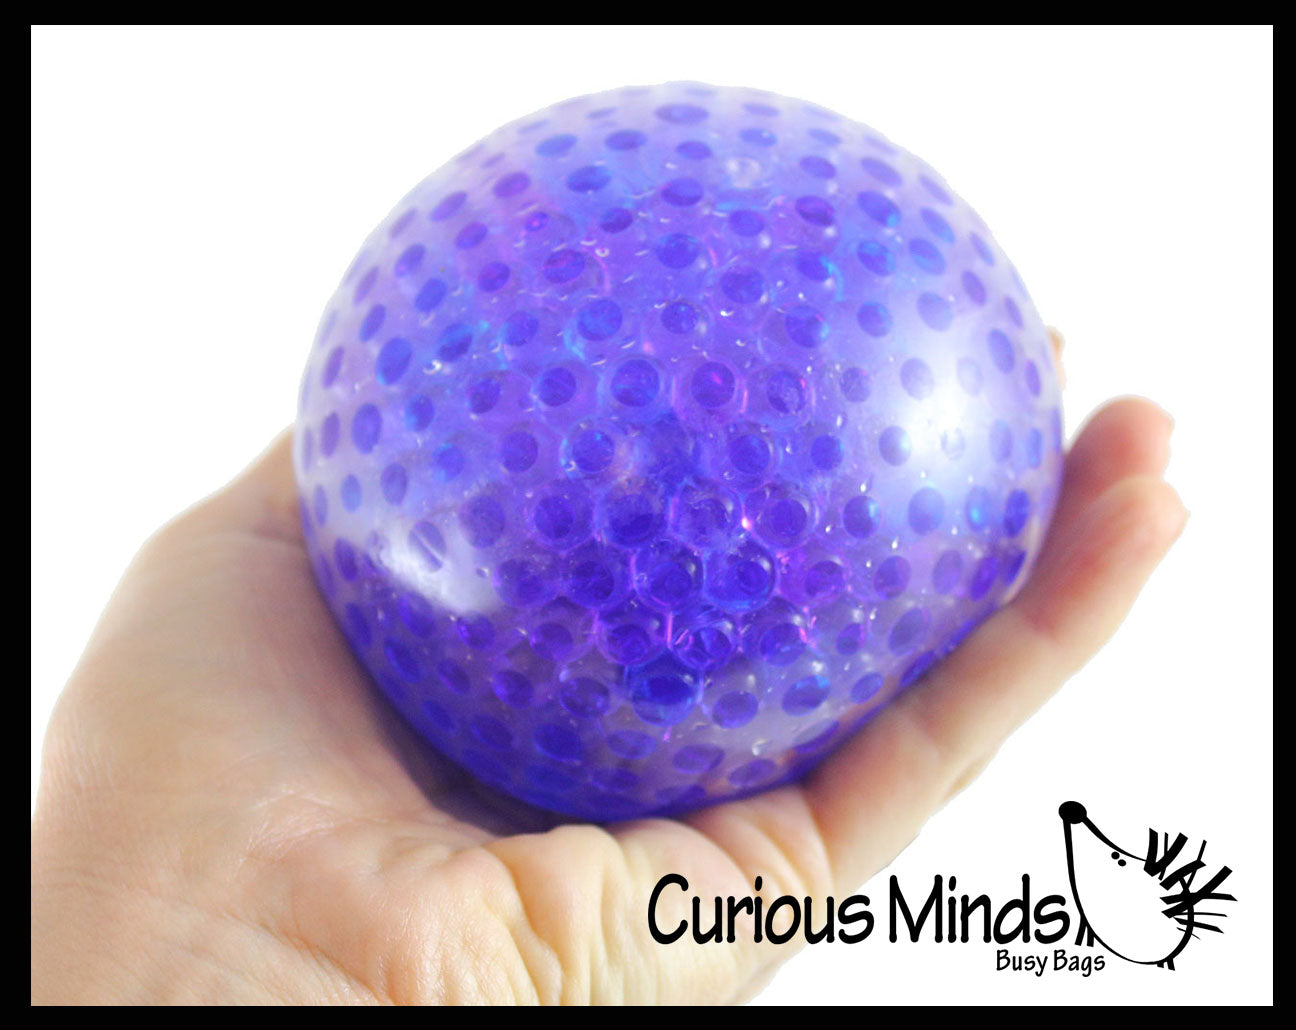 Jumbo 4 Blue and Purple Water Bead Filled Squeeze Stress Ball - Sensory, Stress, Fidget Toy